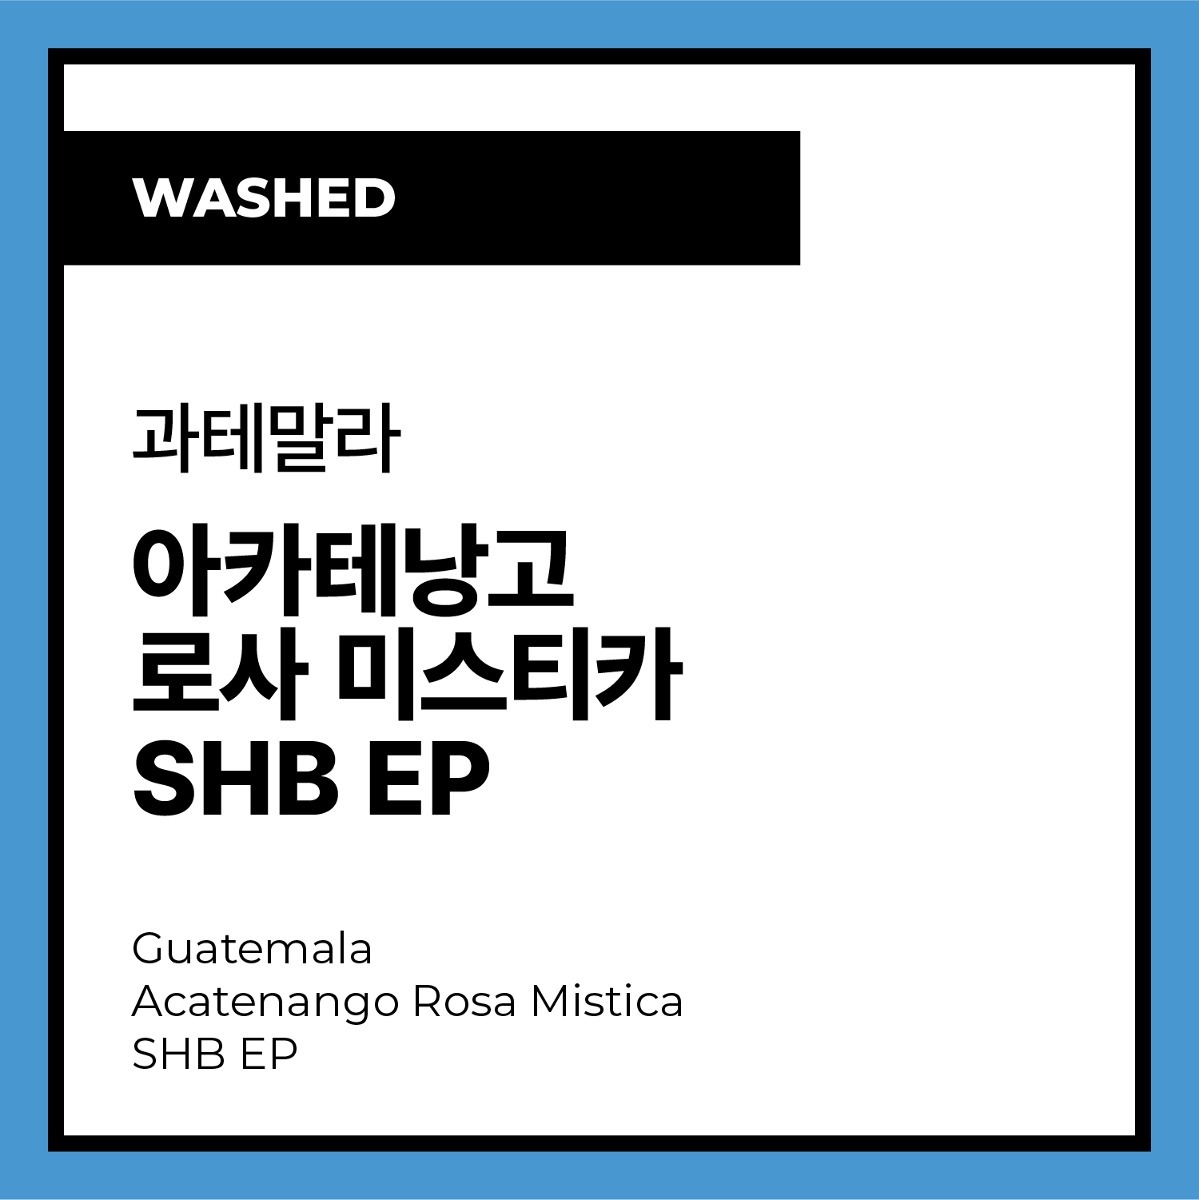 Guatemala Acatenango Rosa Mistica SHB EP (Washed) 과테말라 아카테낭고 로사 미스티카 SHB EP (워시드)